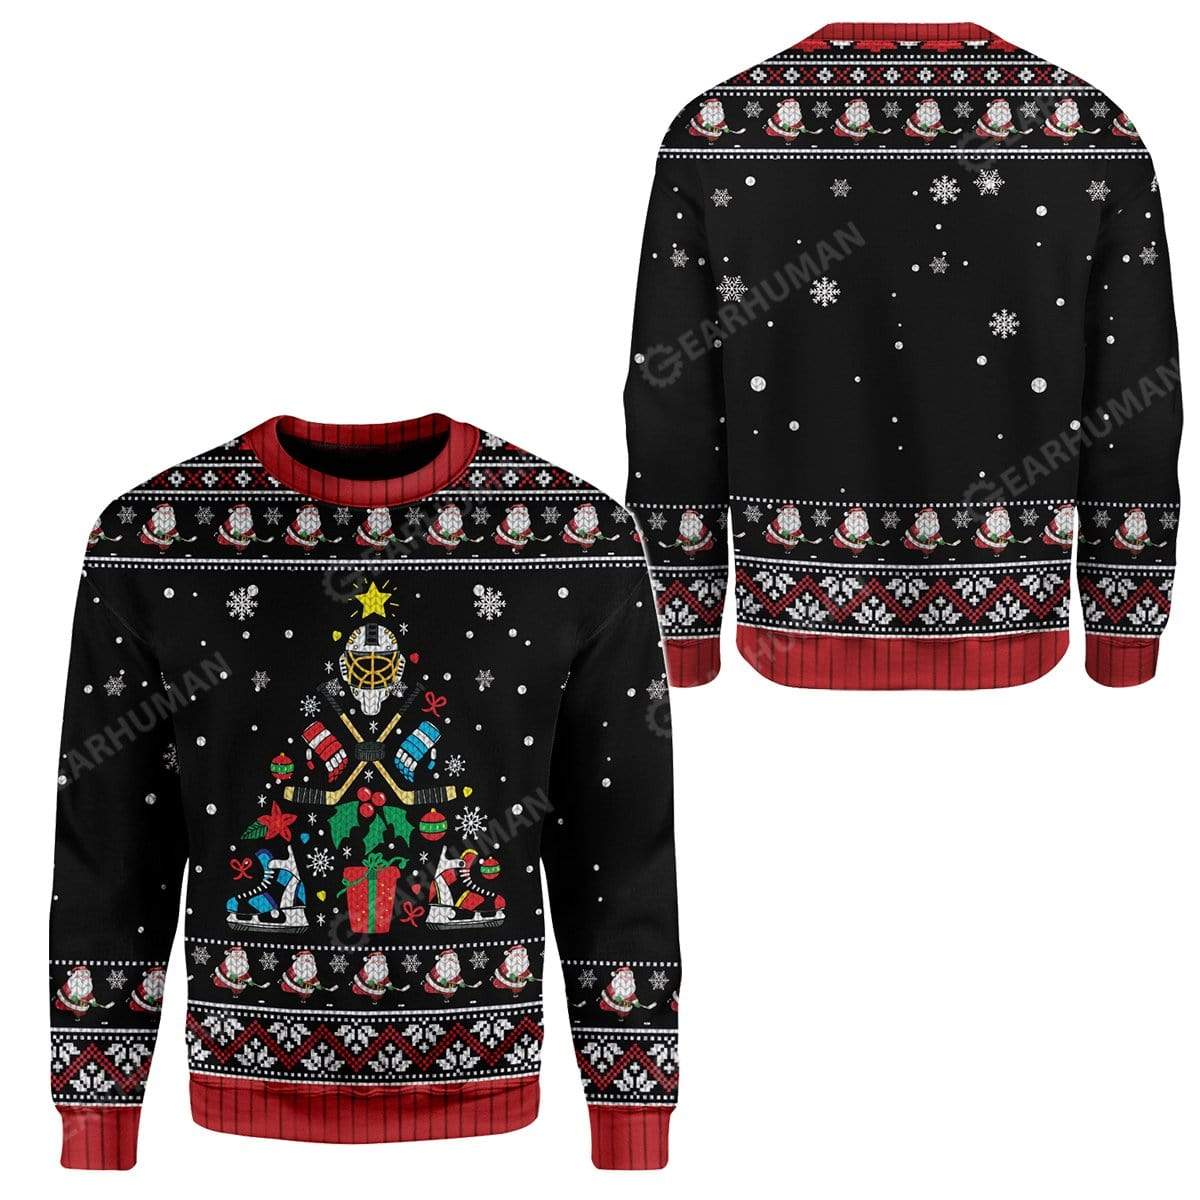 Ugly Christmas Ice Hockey Christmas Tree Sweater Apparel SP-AT2711196 Ugly Christmas Sweater 